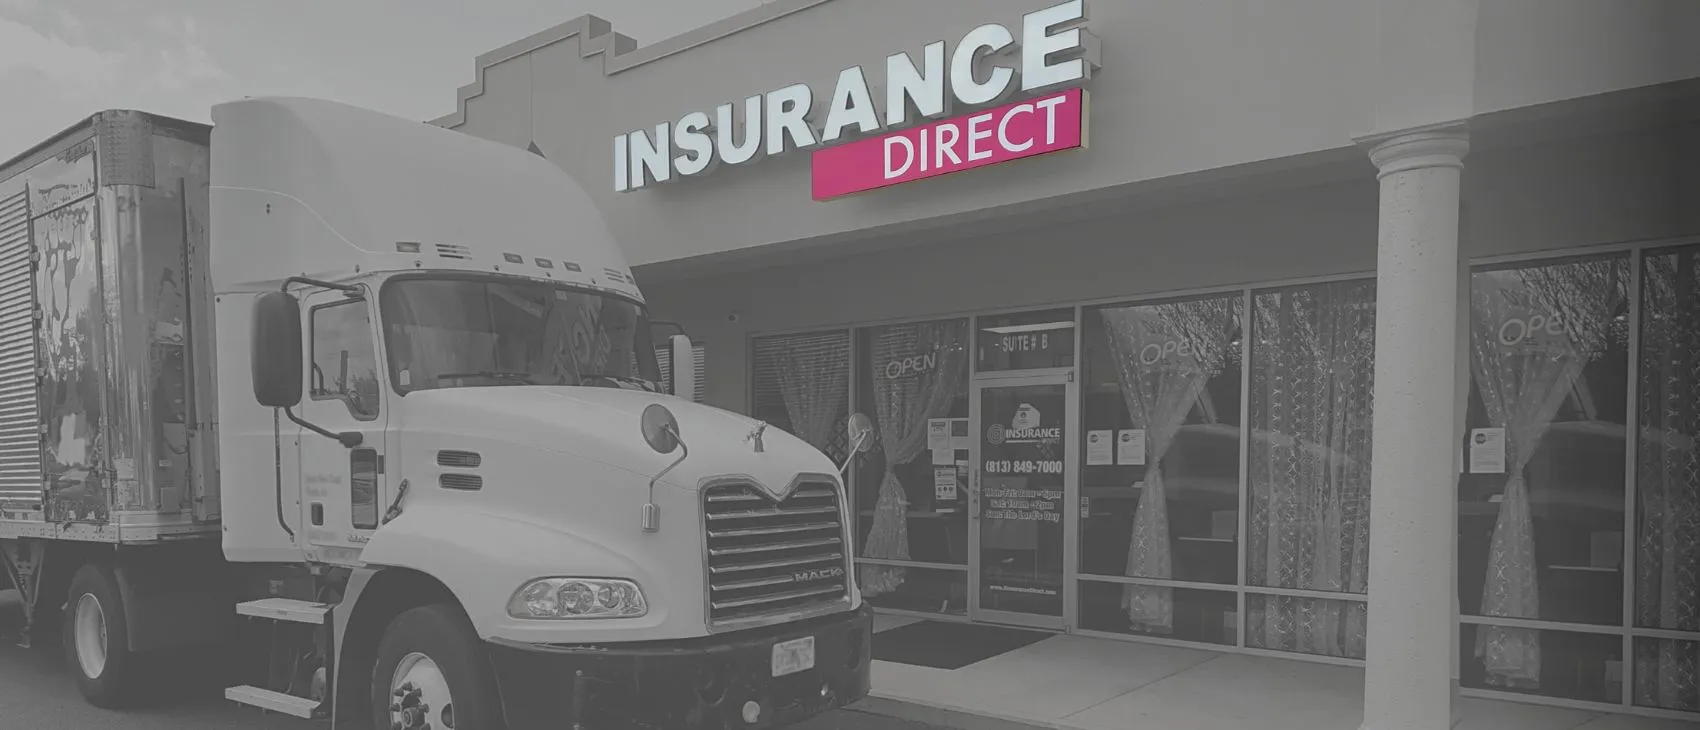 Cheap Commercial Auto Insurance in FL, TX & TN